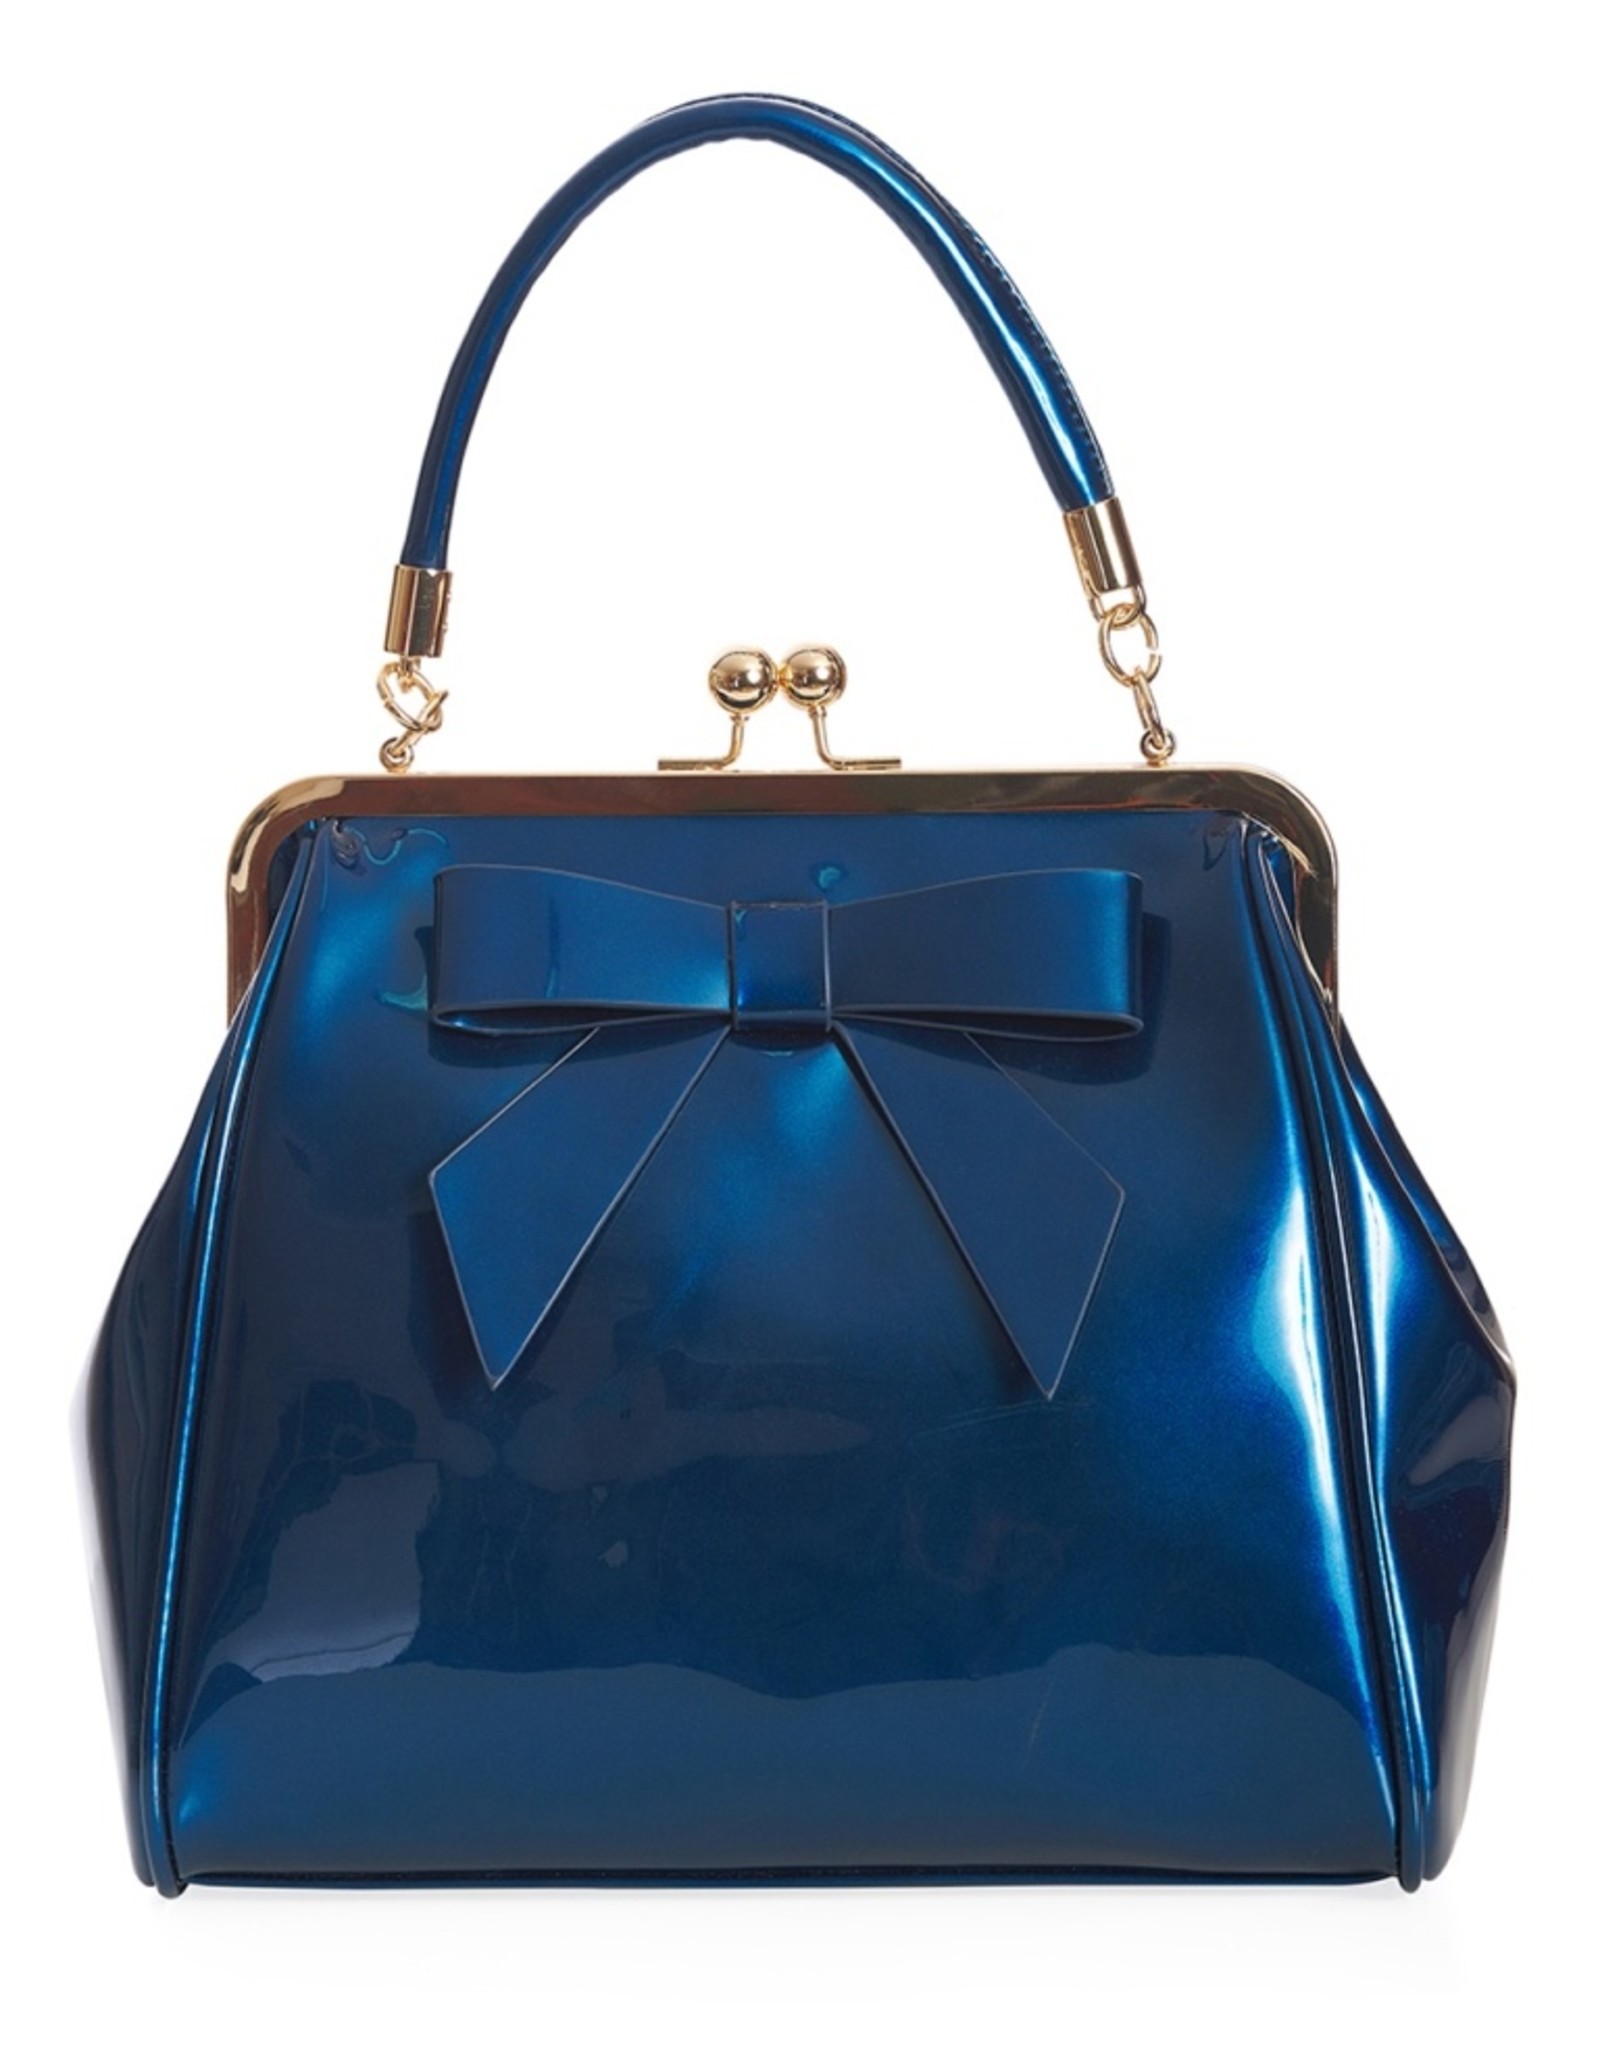 Banned Vintage bags Retro bags - Banned handbag American Vintage (teal blue)